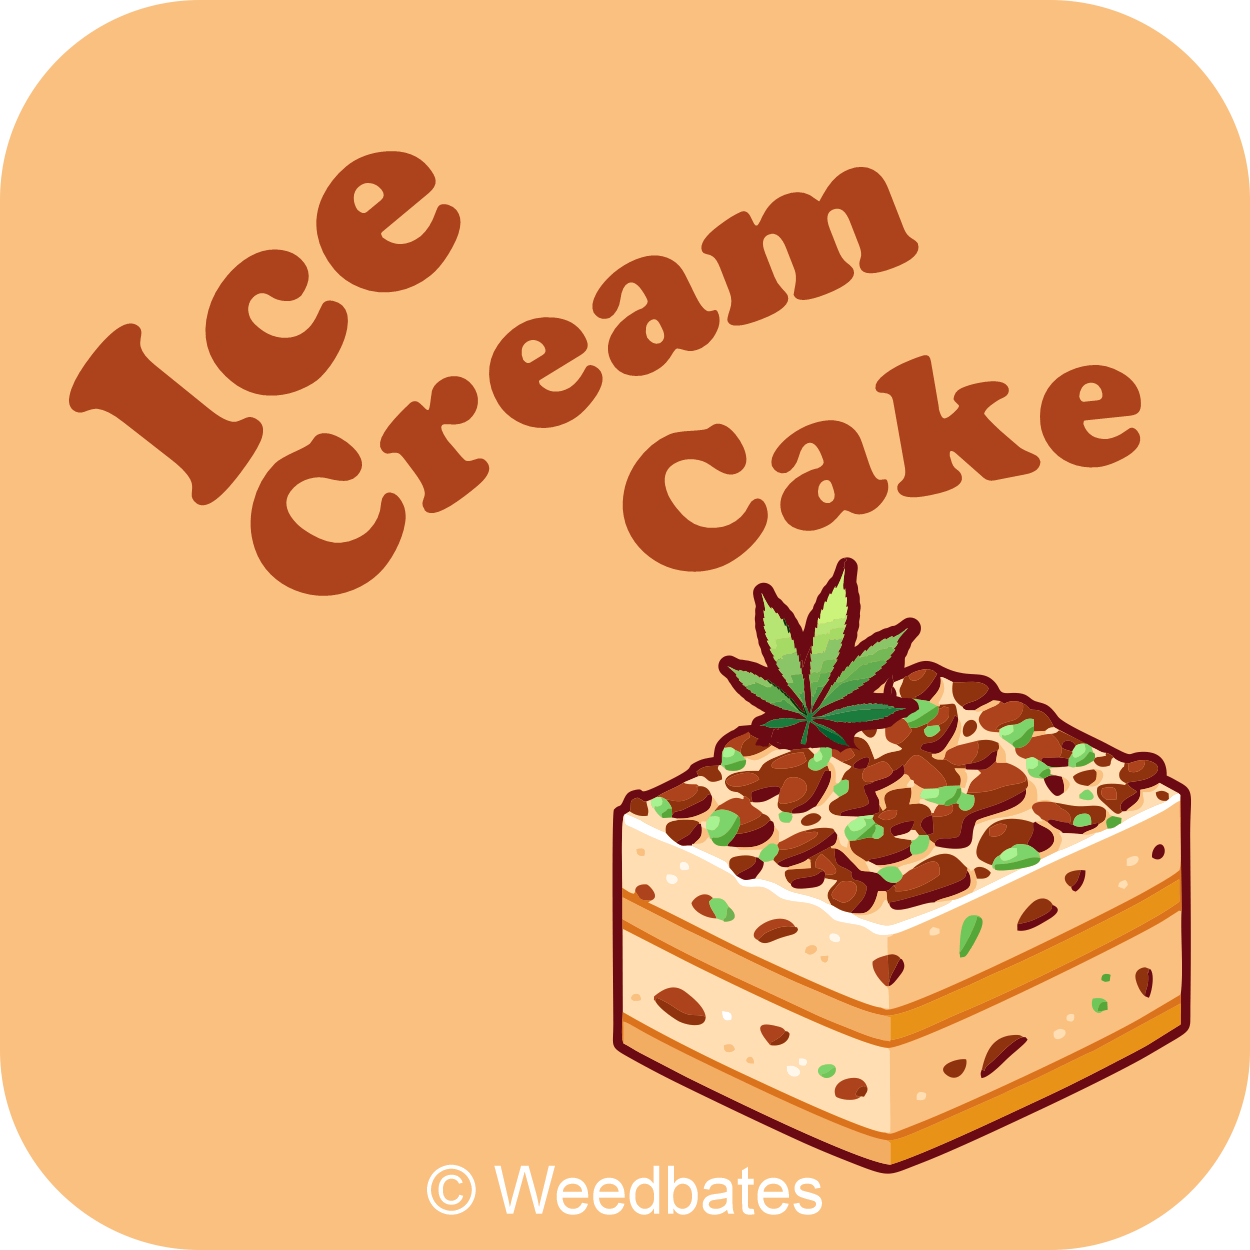 Ice Cream Cake strain